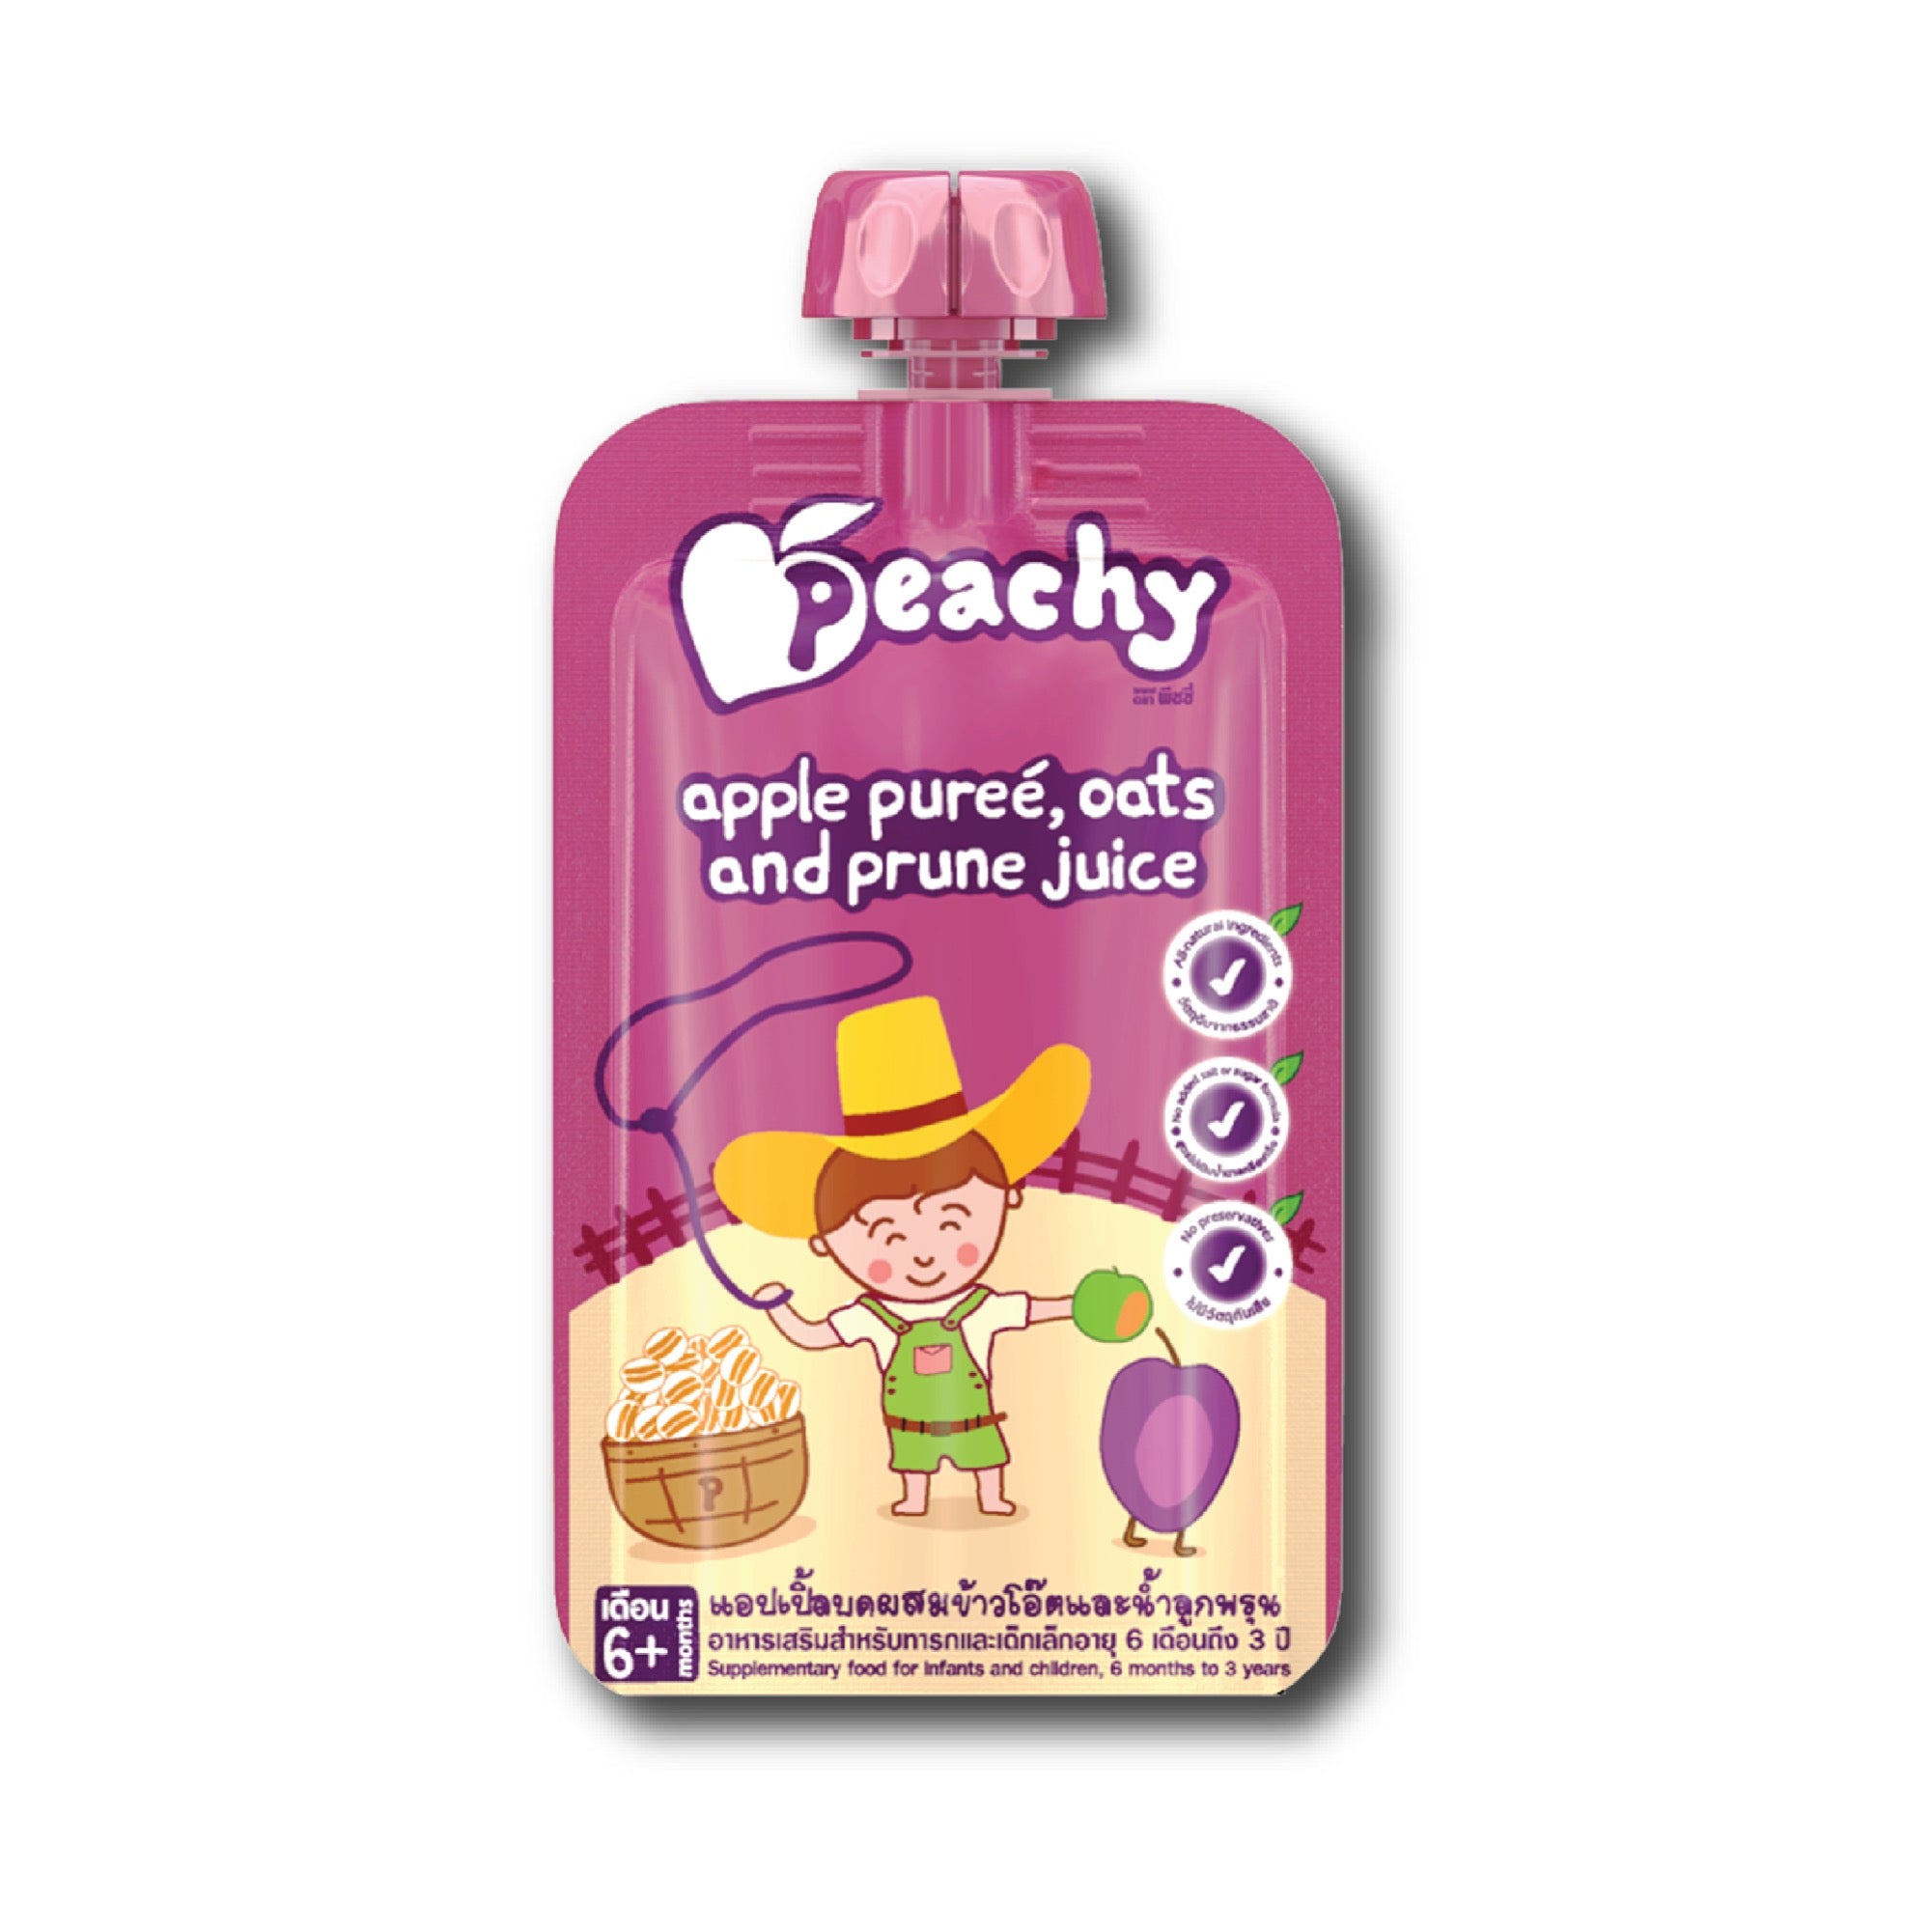 Peachy - Apple, Oats and Prune Juice Purée